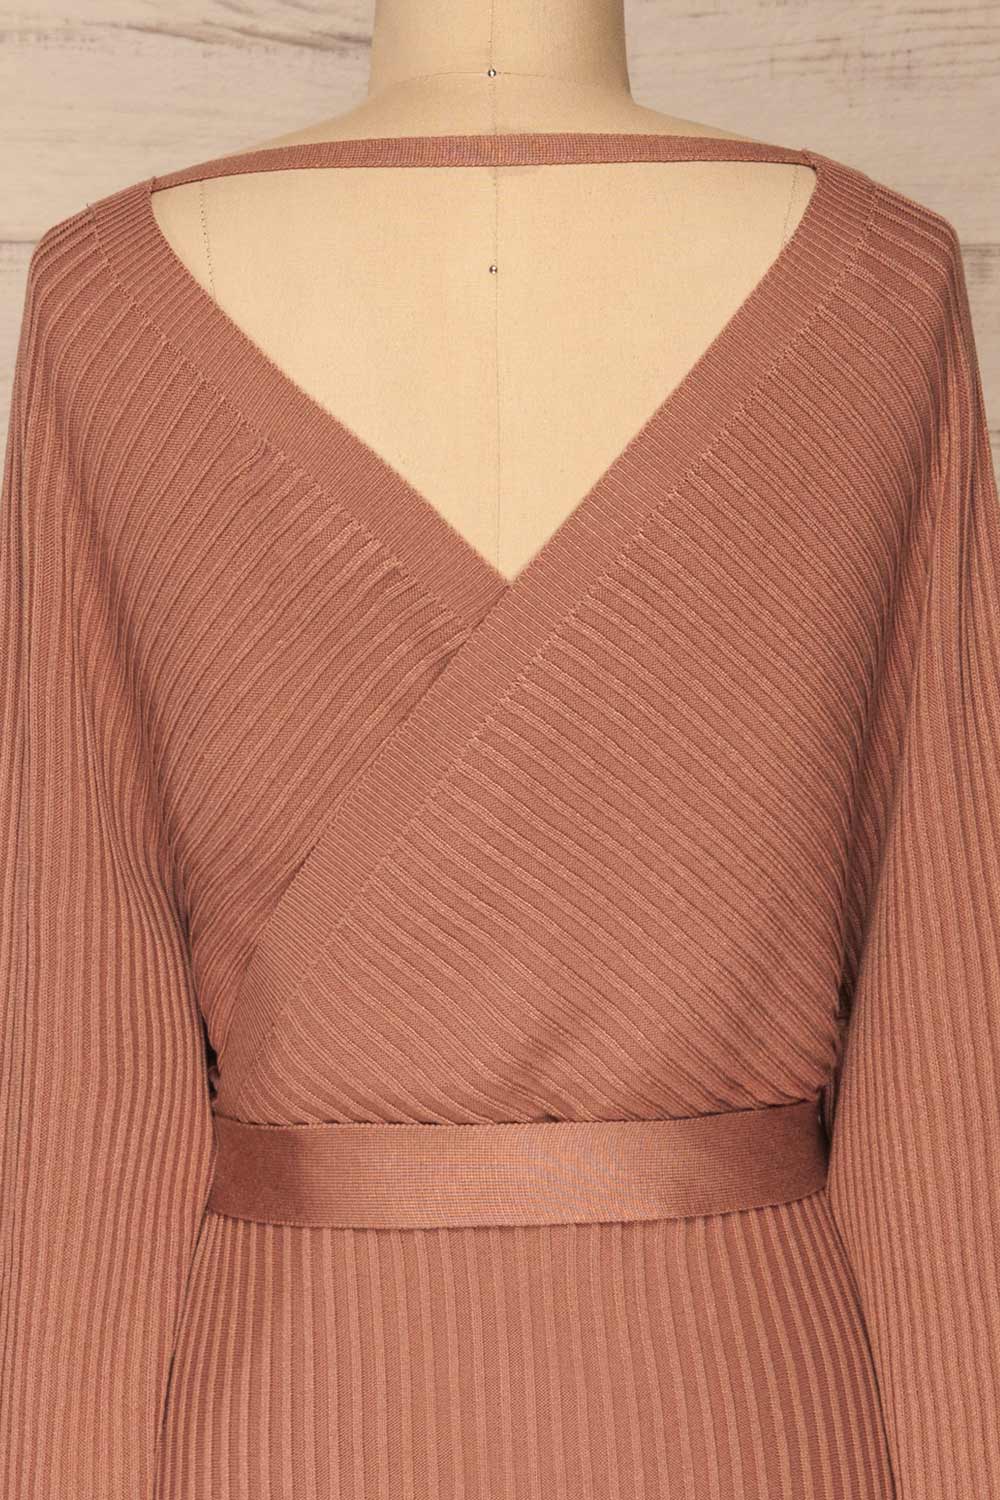 Bergame Mauve Knitted Sweater Dress | La petite garçonne back close-up